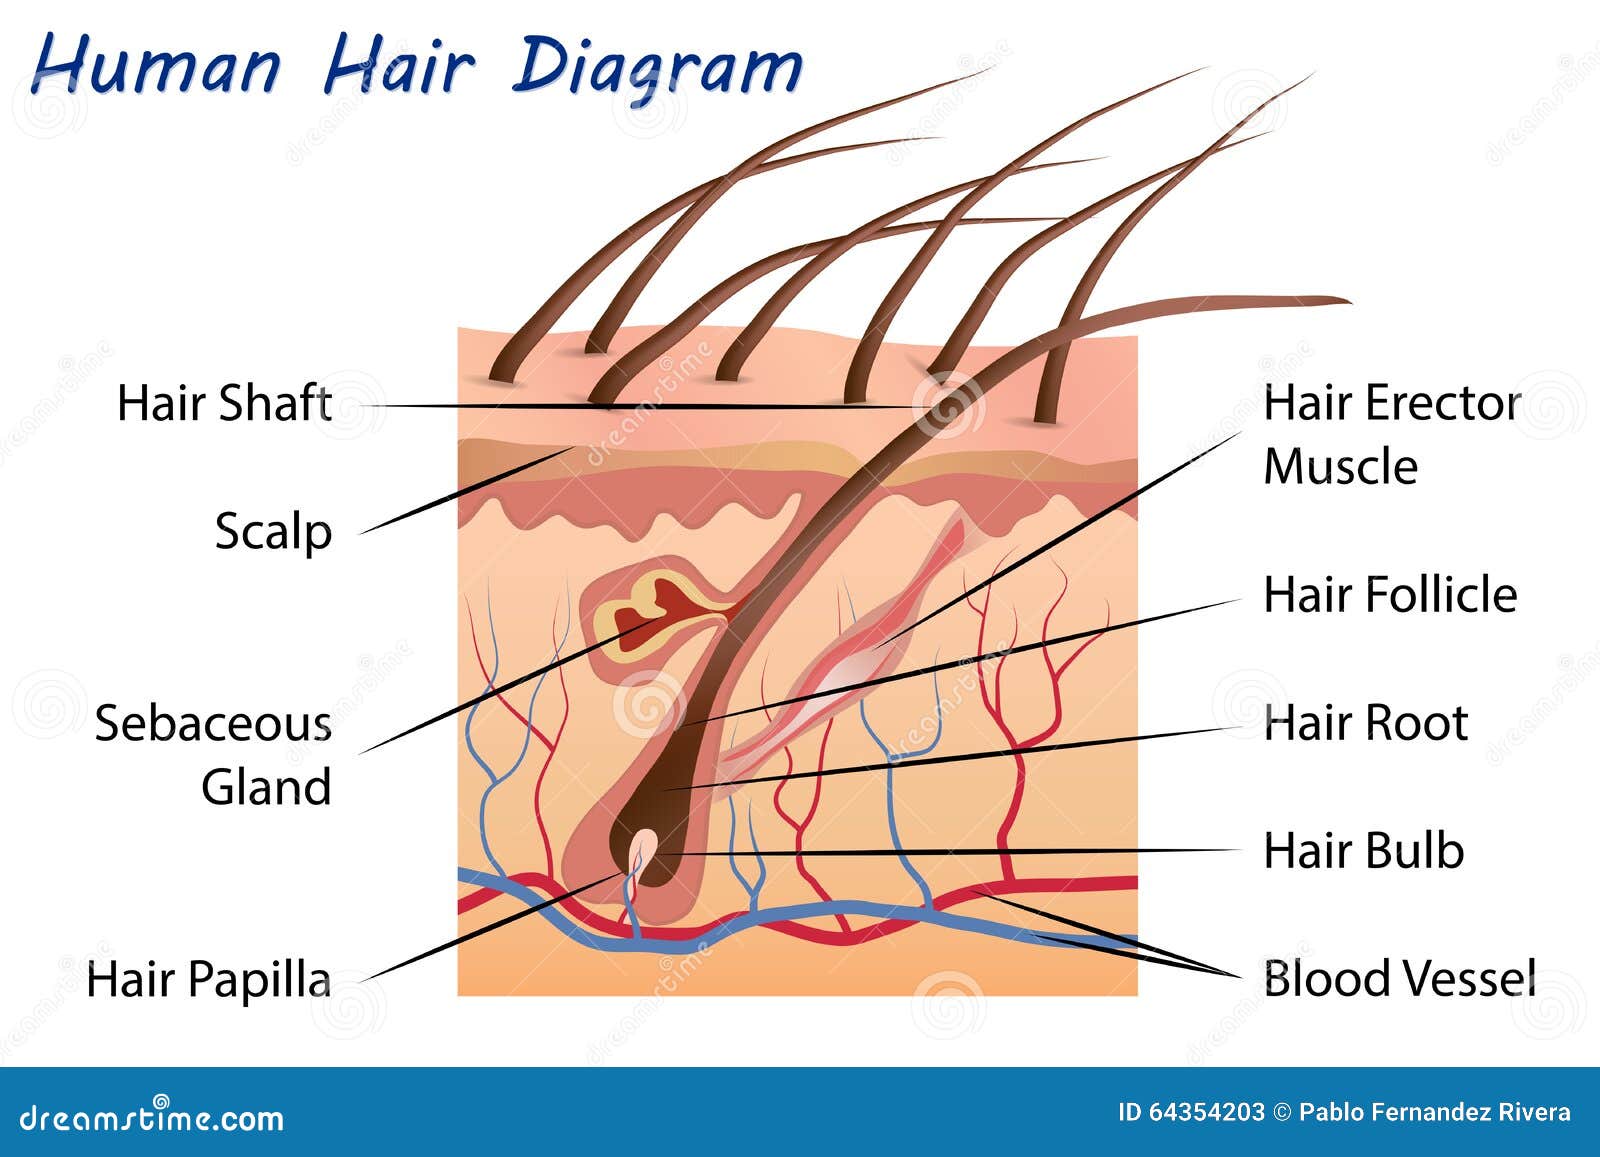 labeled hair follicle diagram